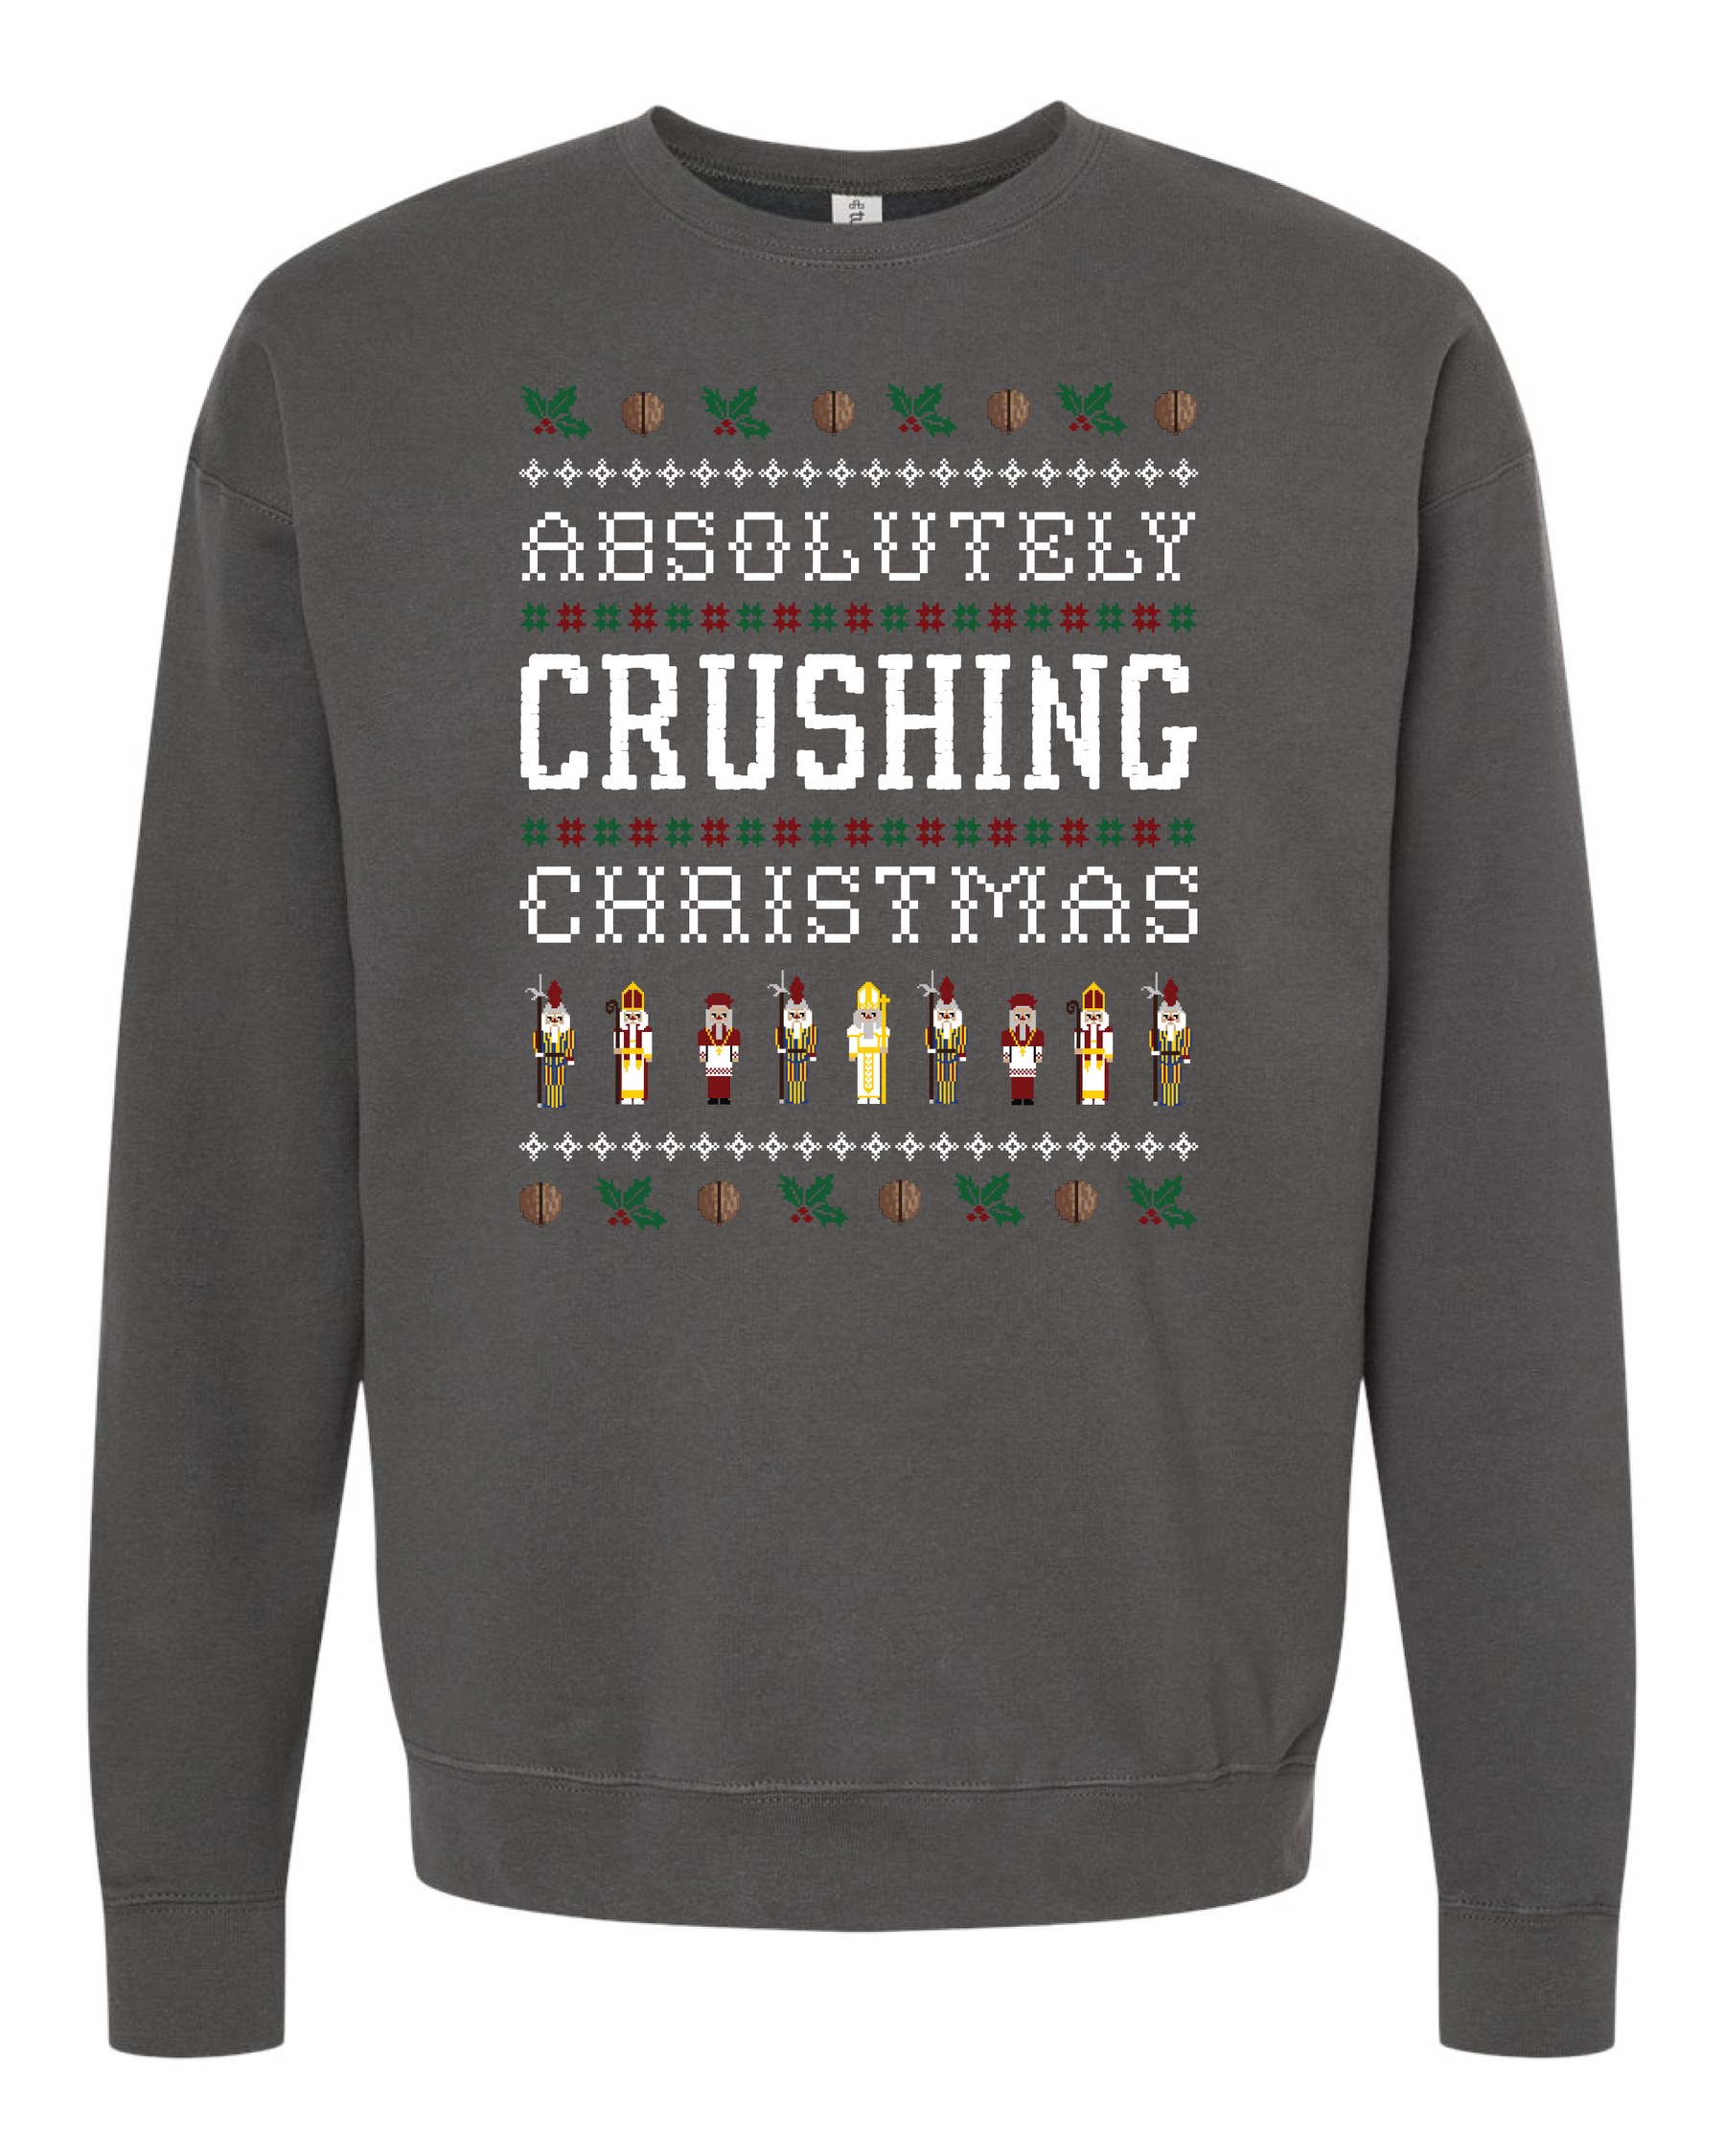 Absolutely Crushing Christmas Sweatshirt (Crewneck)